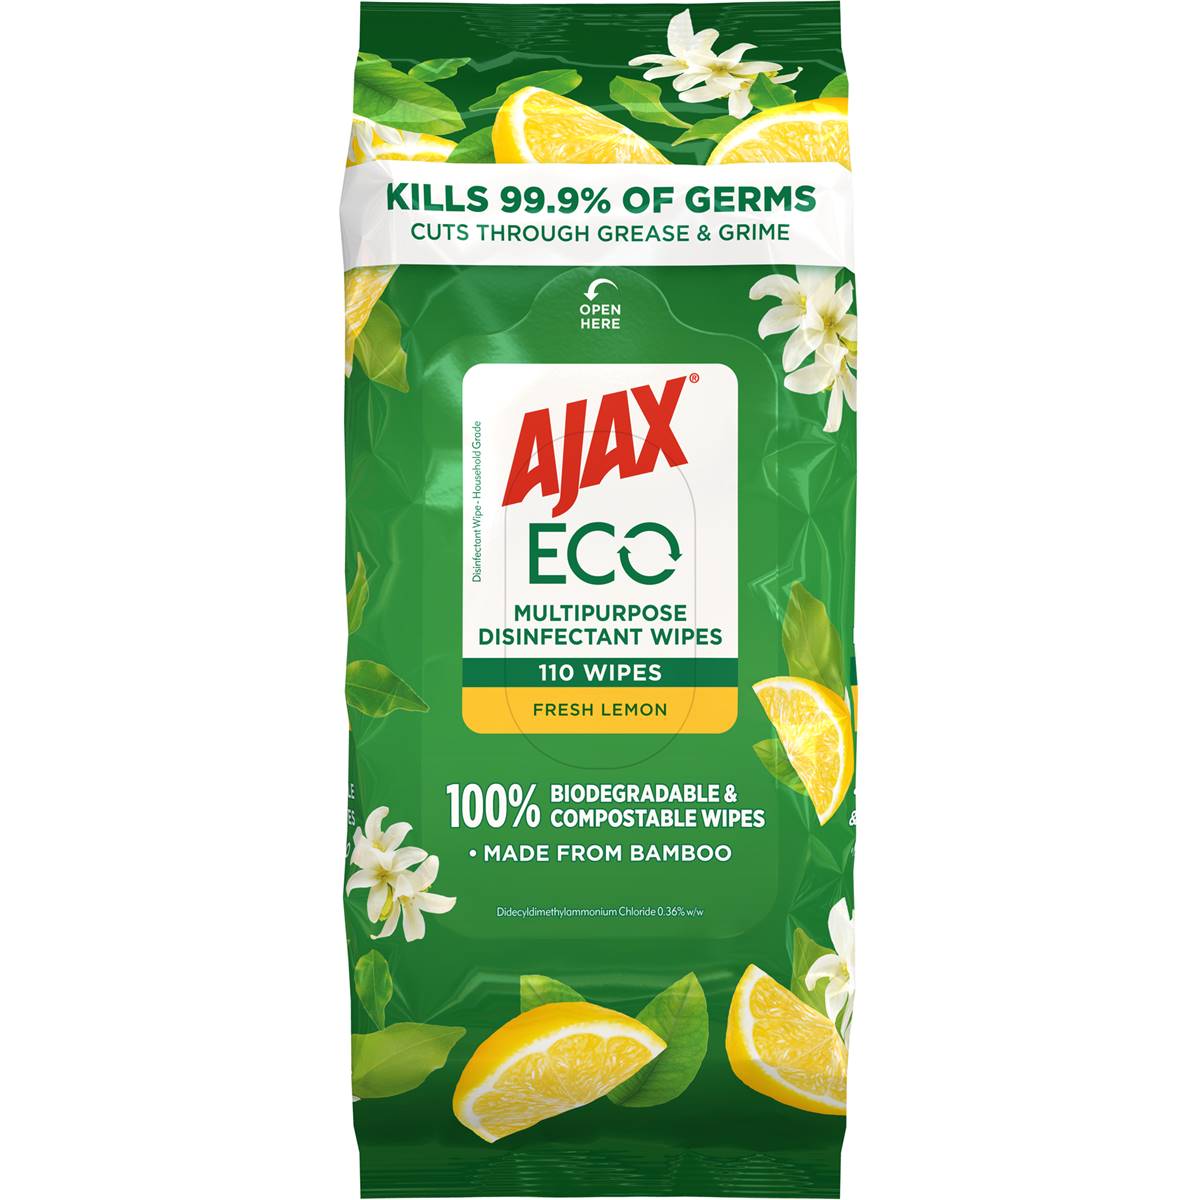 Ajax Eco Disinfectant Wipes Multipurpose Fresh Lemon110pk